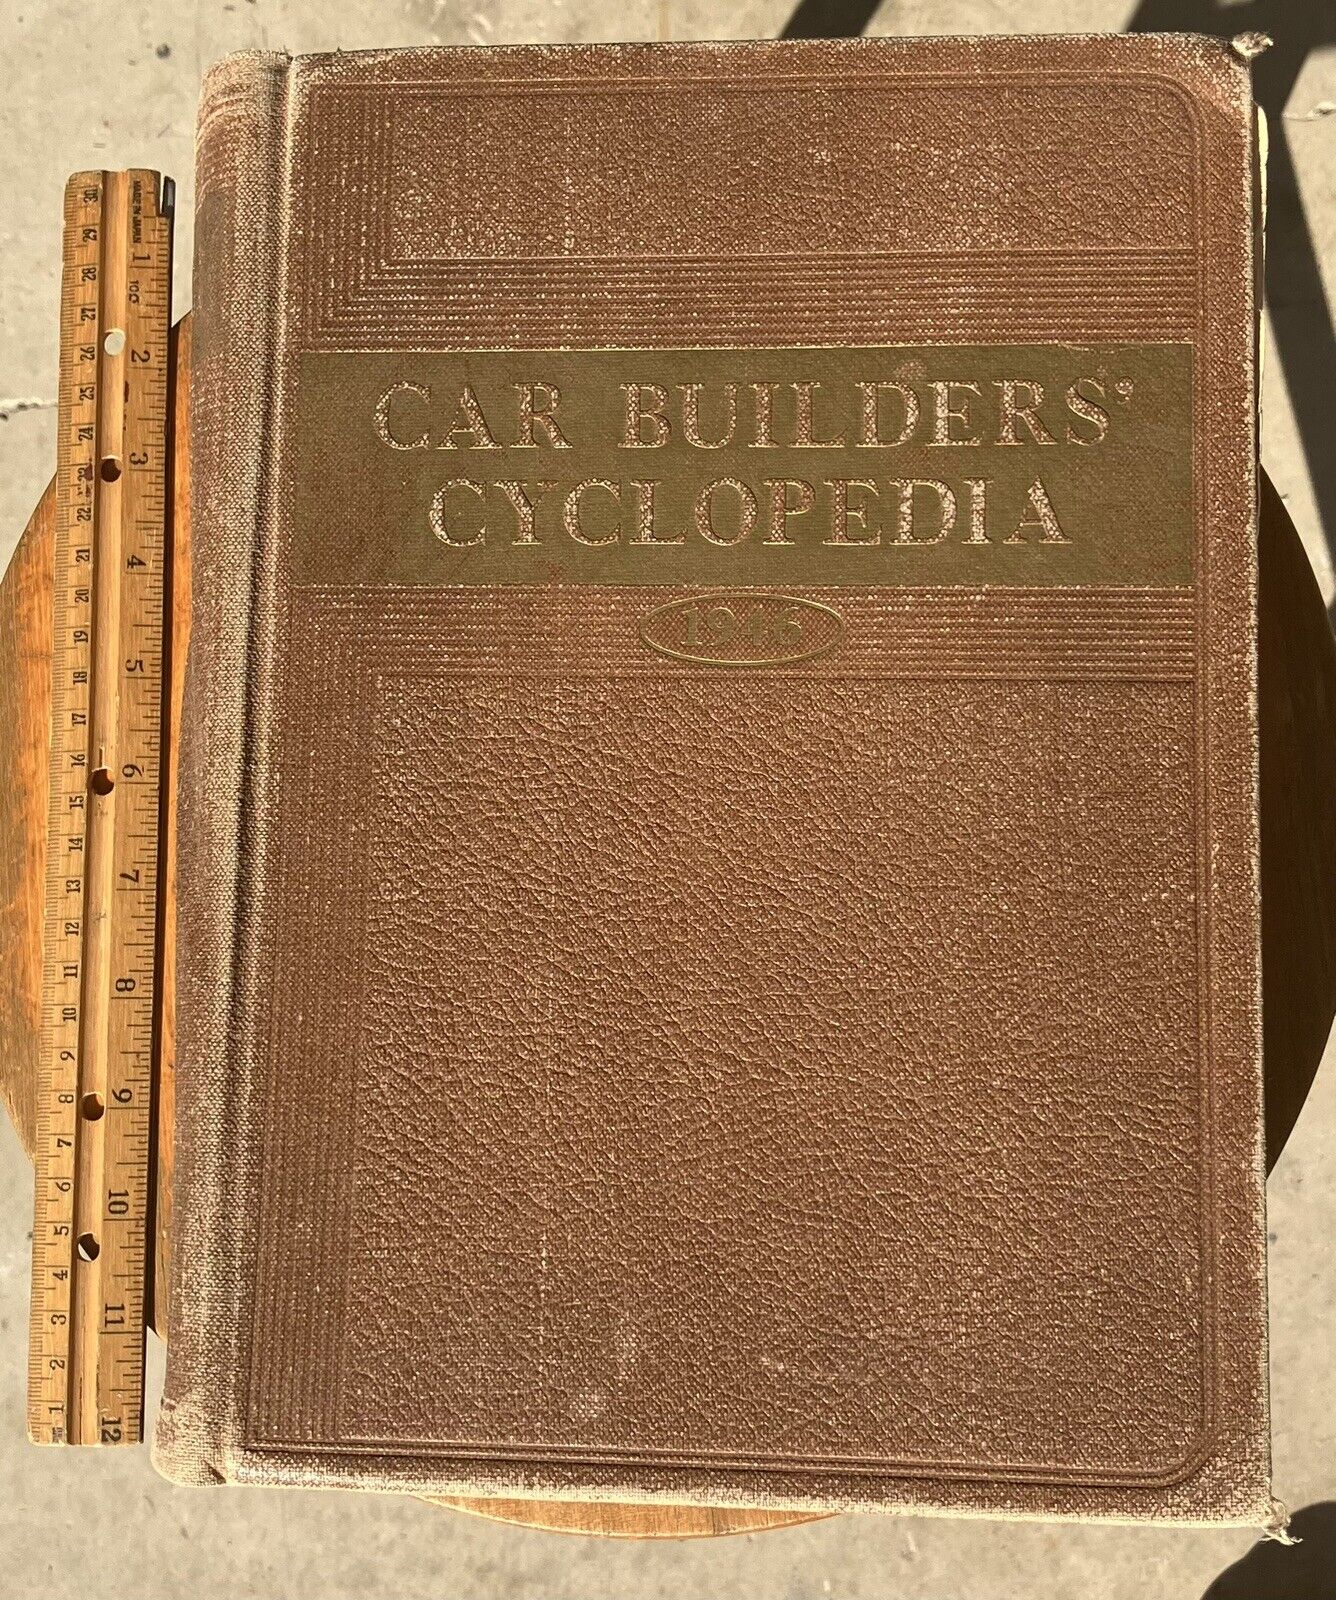 Car Builders Cyclopedia 1946 Railway Railroad